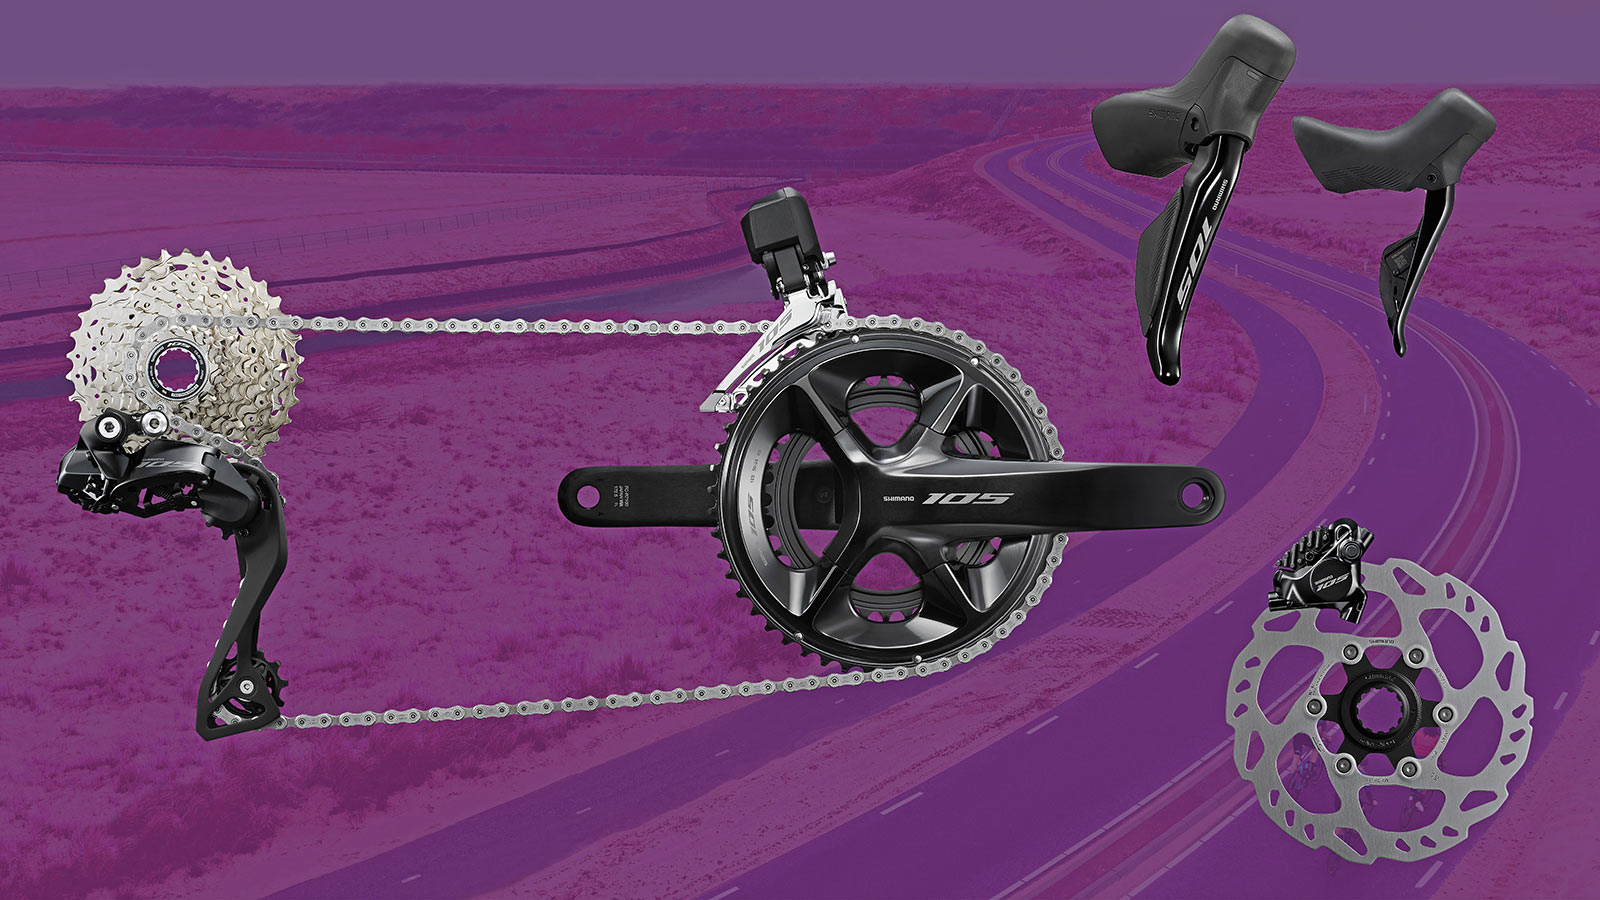 Shimano 105 Di2 R7100 affordable electronic shift road bike groupset, purple